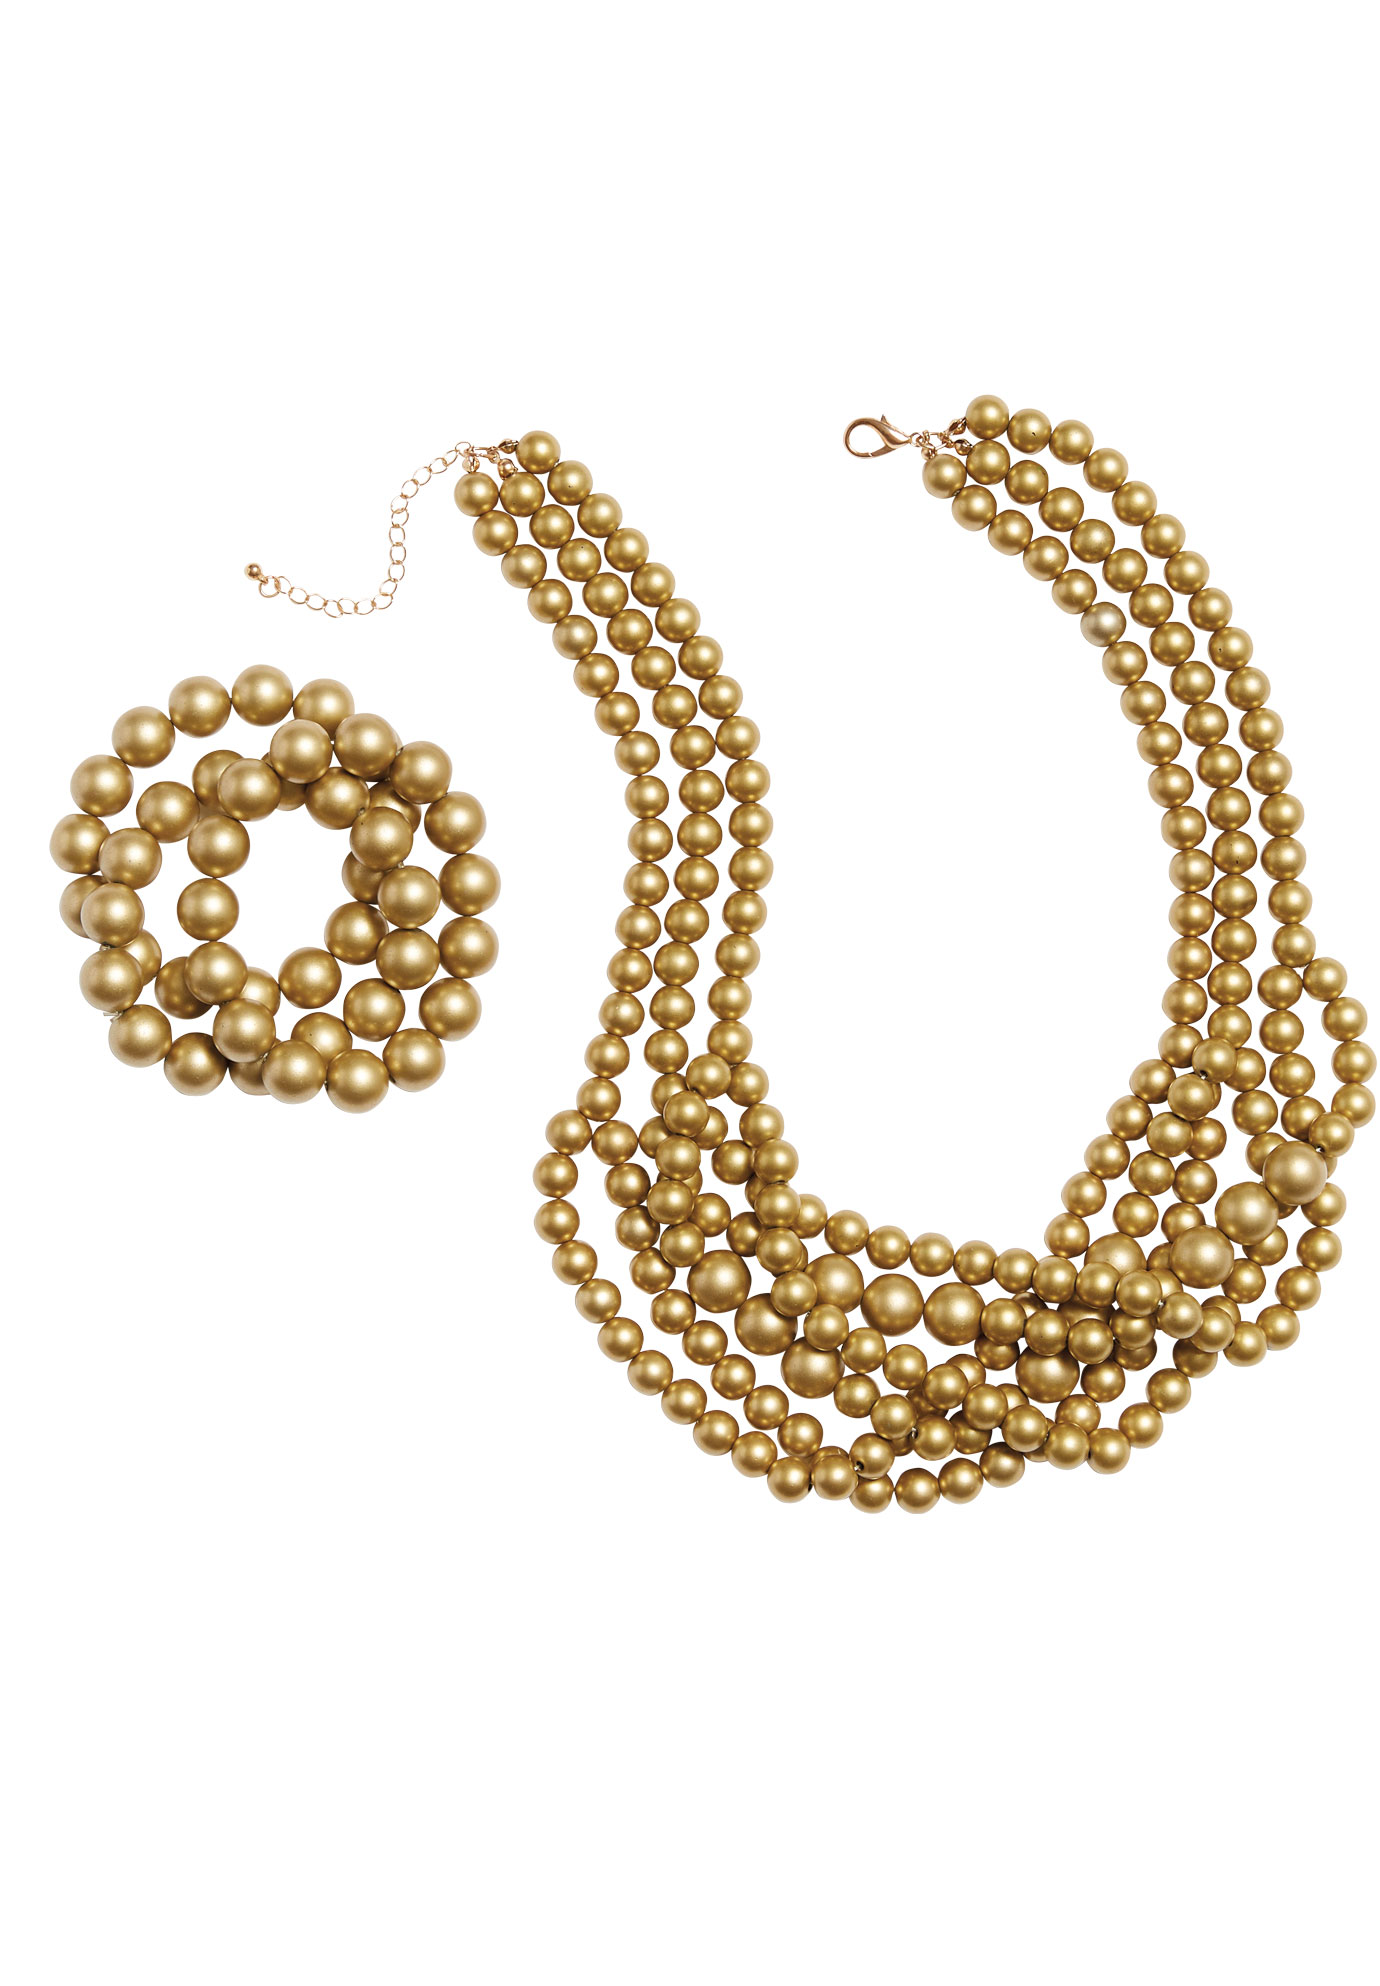 Beaded Necklace and Bracelet Set, 